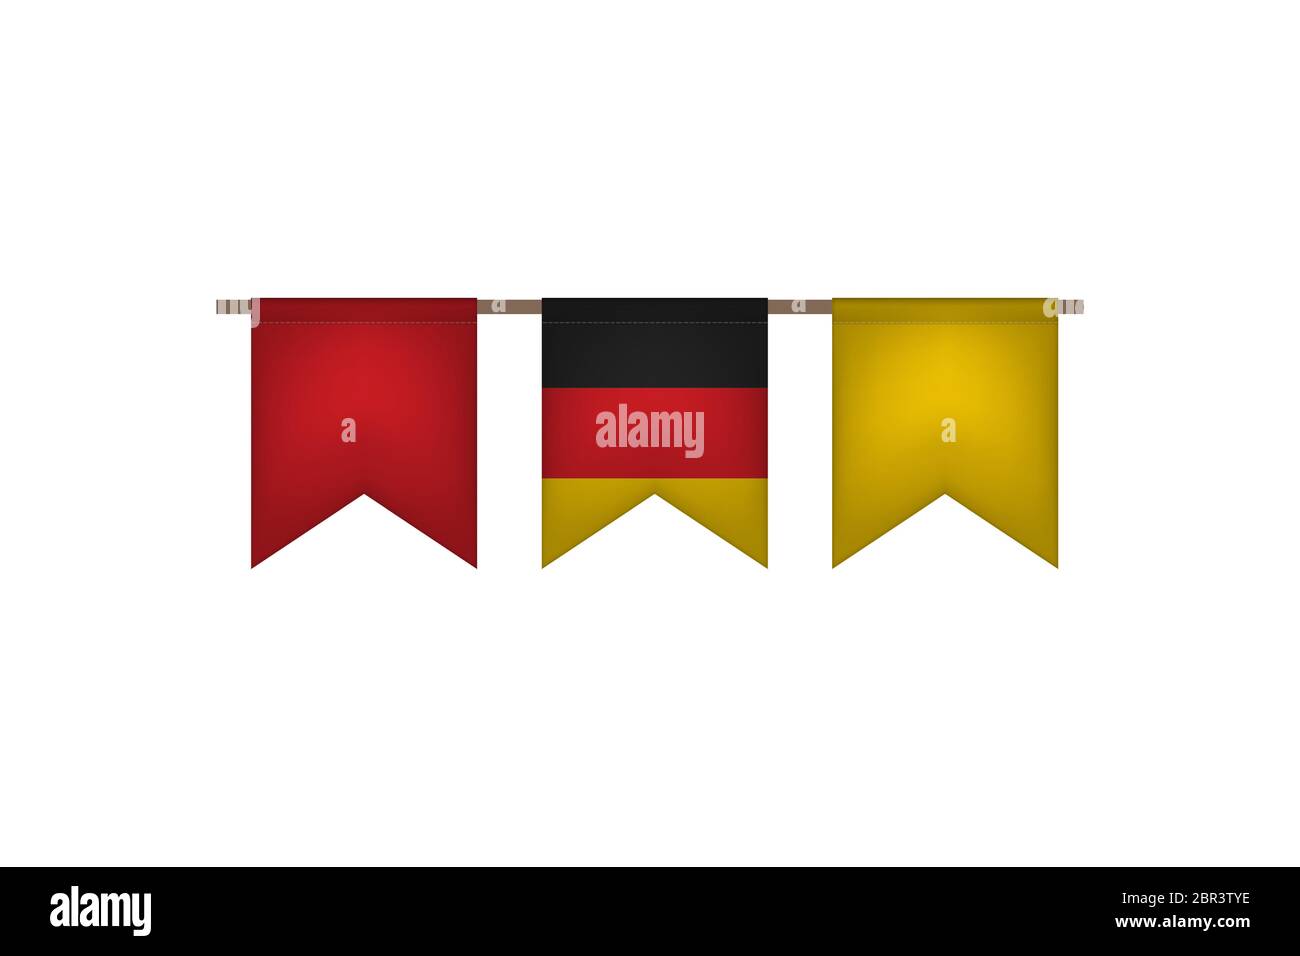 Deutschland Flagge Girlande. Oktoberfest. Karneval und Festival-Event. Vektorgrafik. Schwarz, rot gelb Stock Vektor